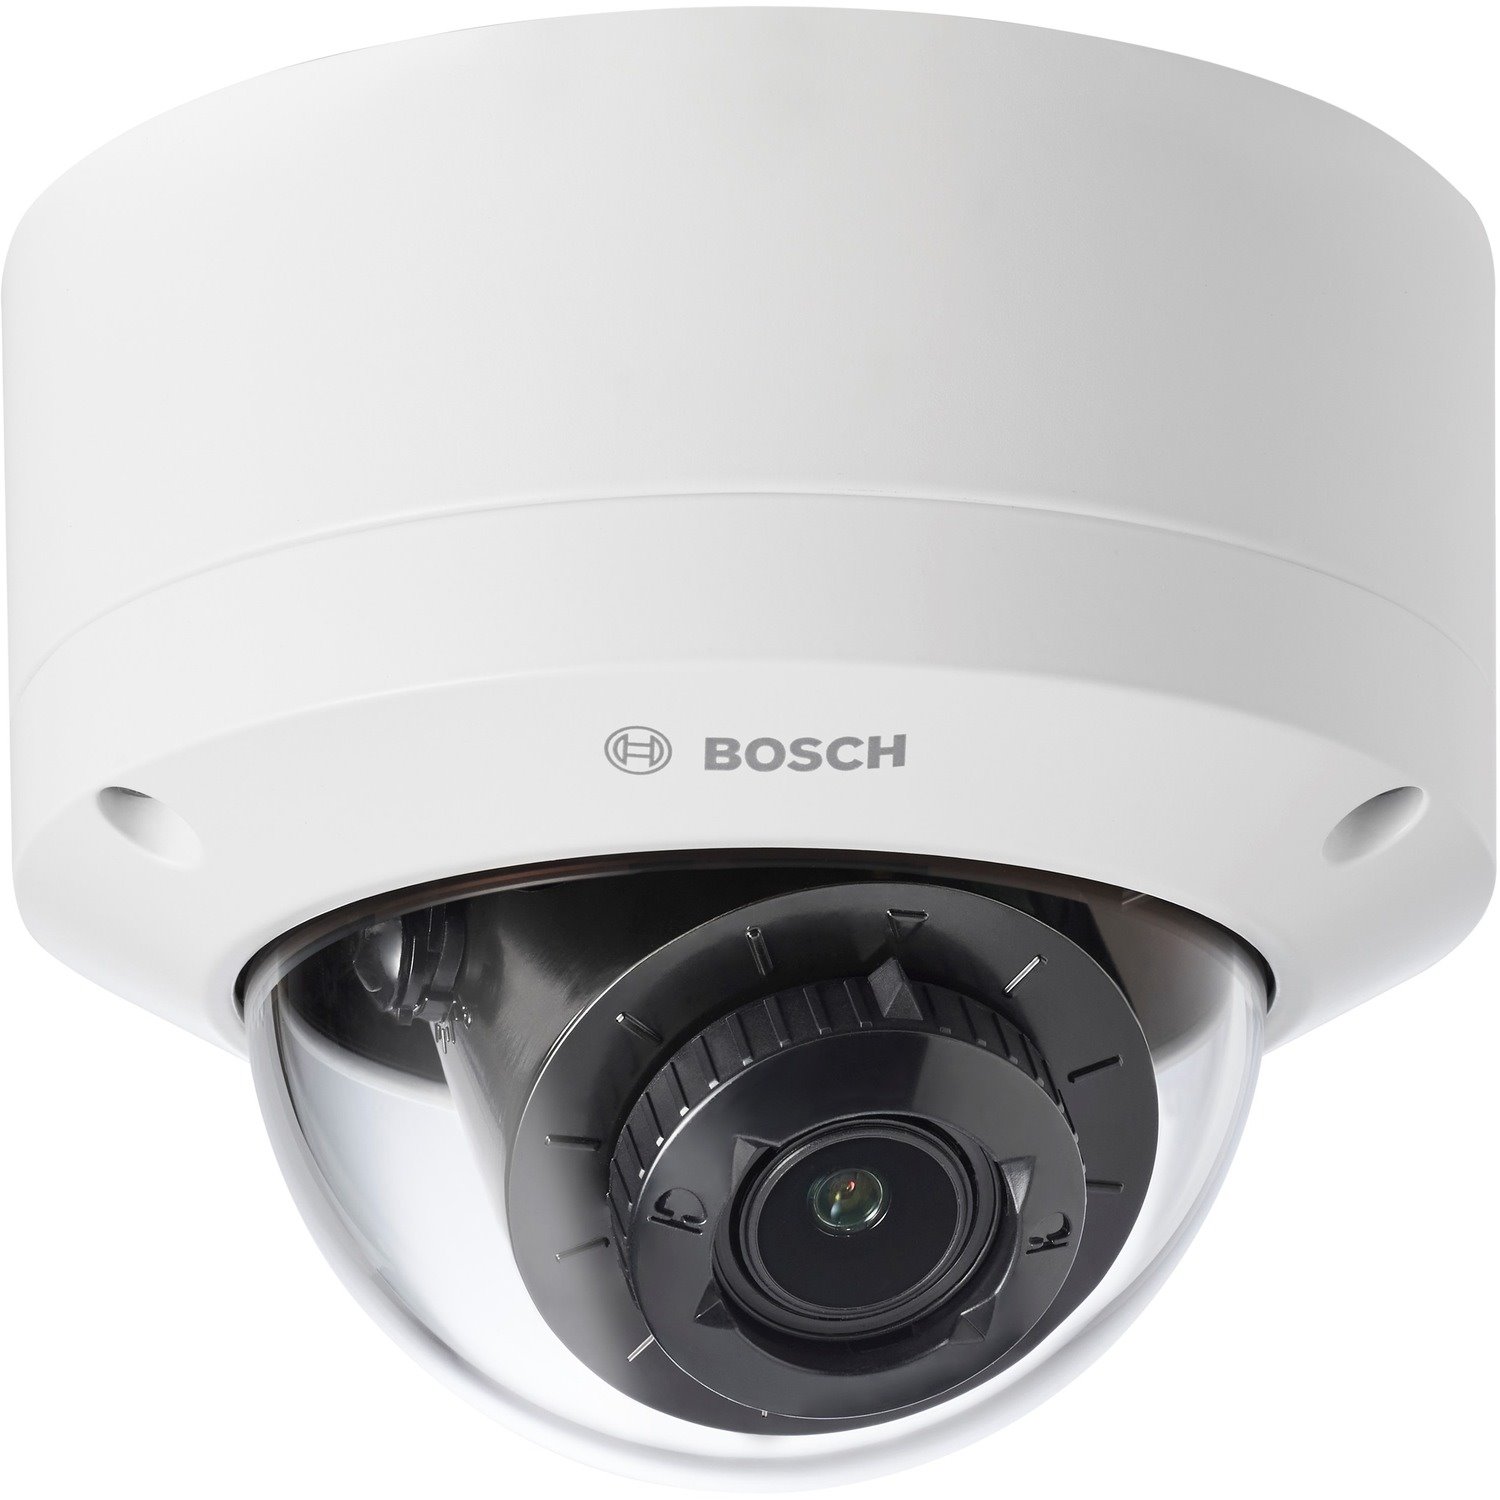 Bosch 5 Megapixel Surveillance Camera - Color - Dome